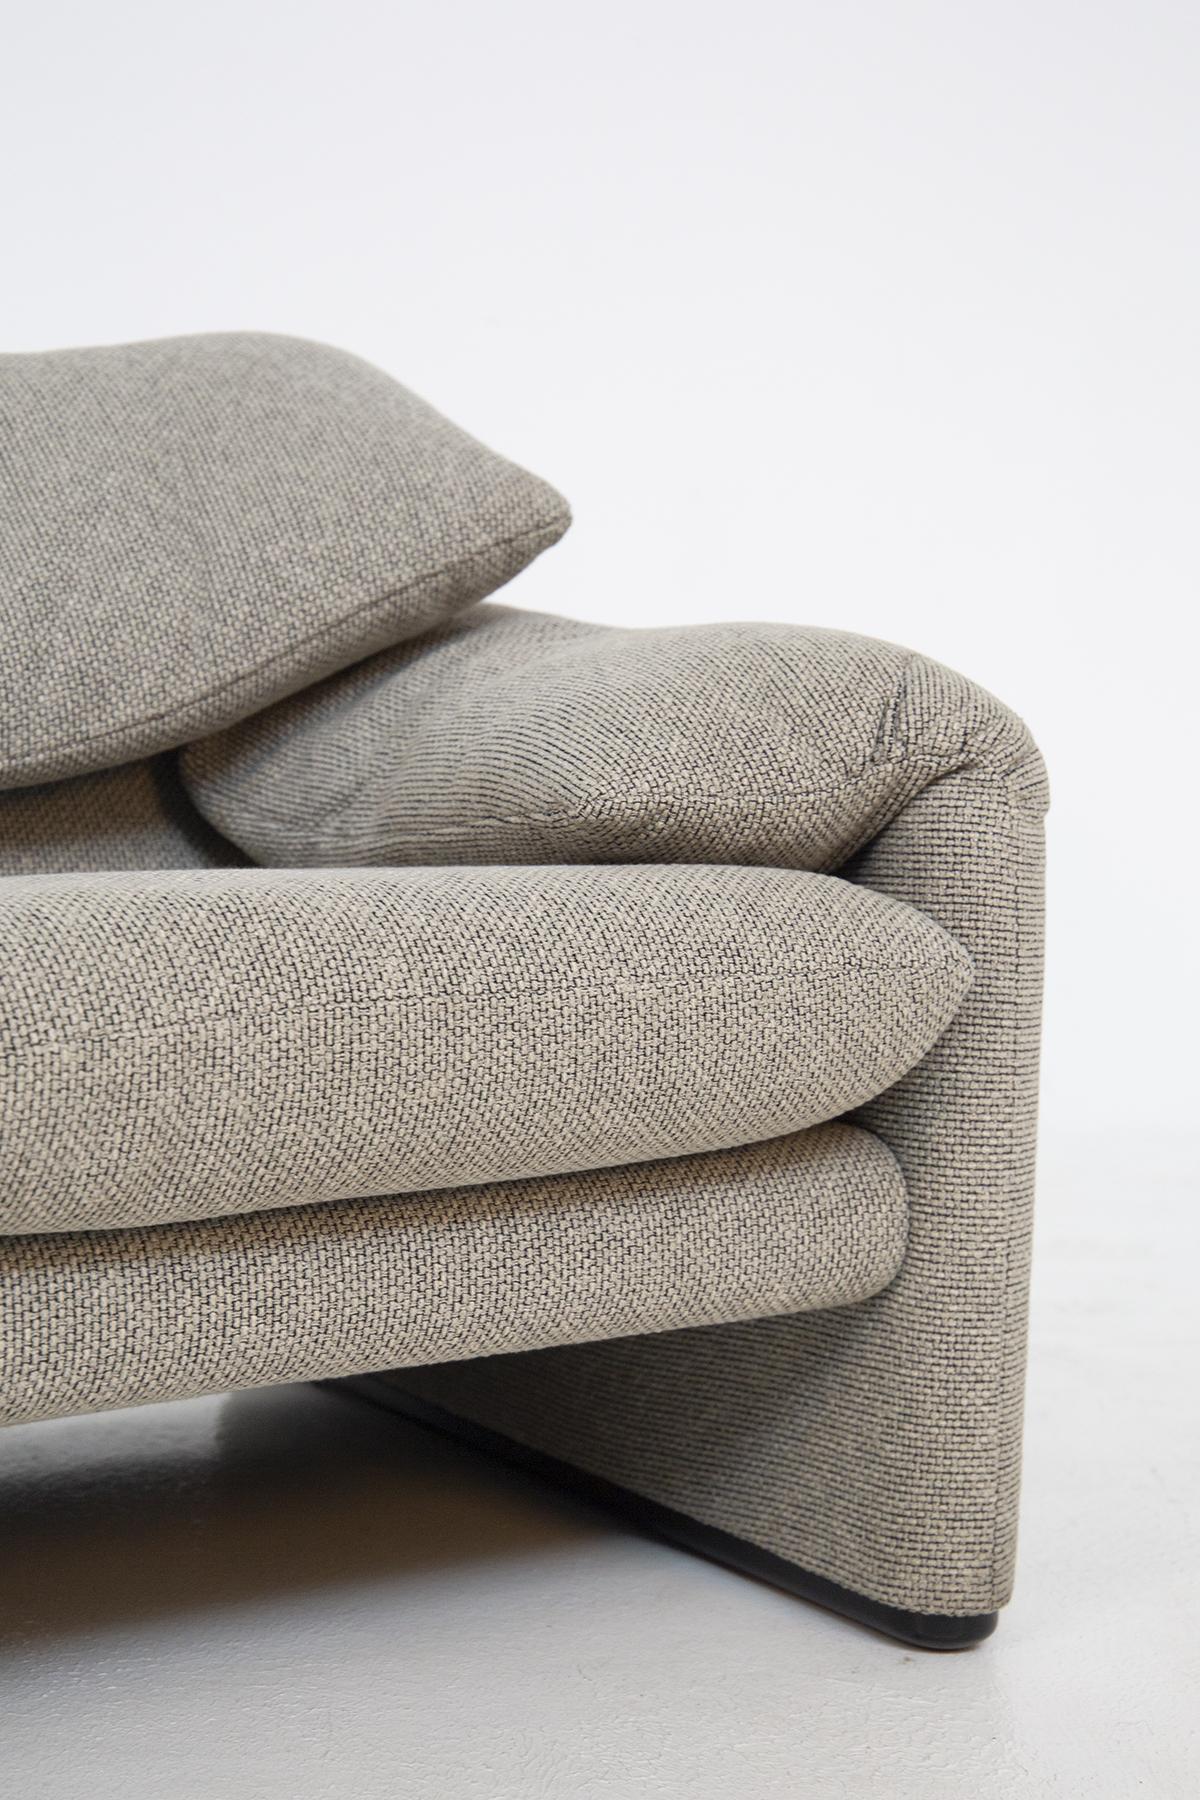 Mid-Century Modern Maralunga Sofa by Vico Magistretti for Cassina in Fabric Grey